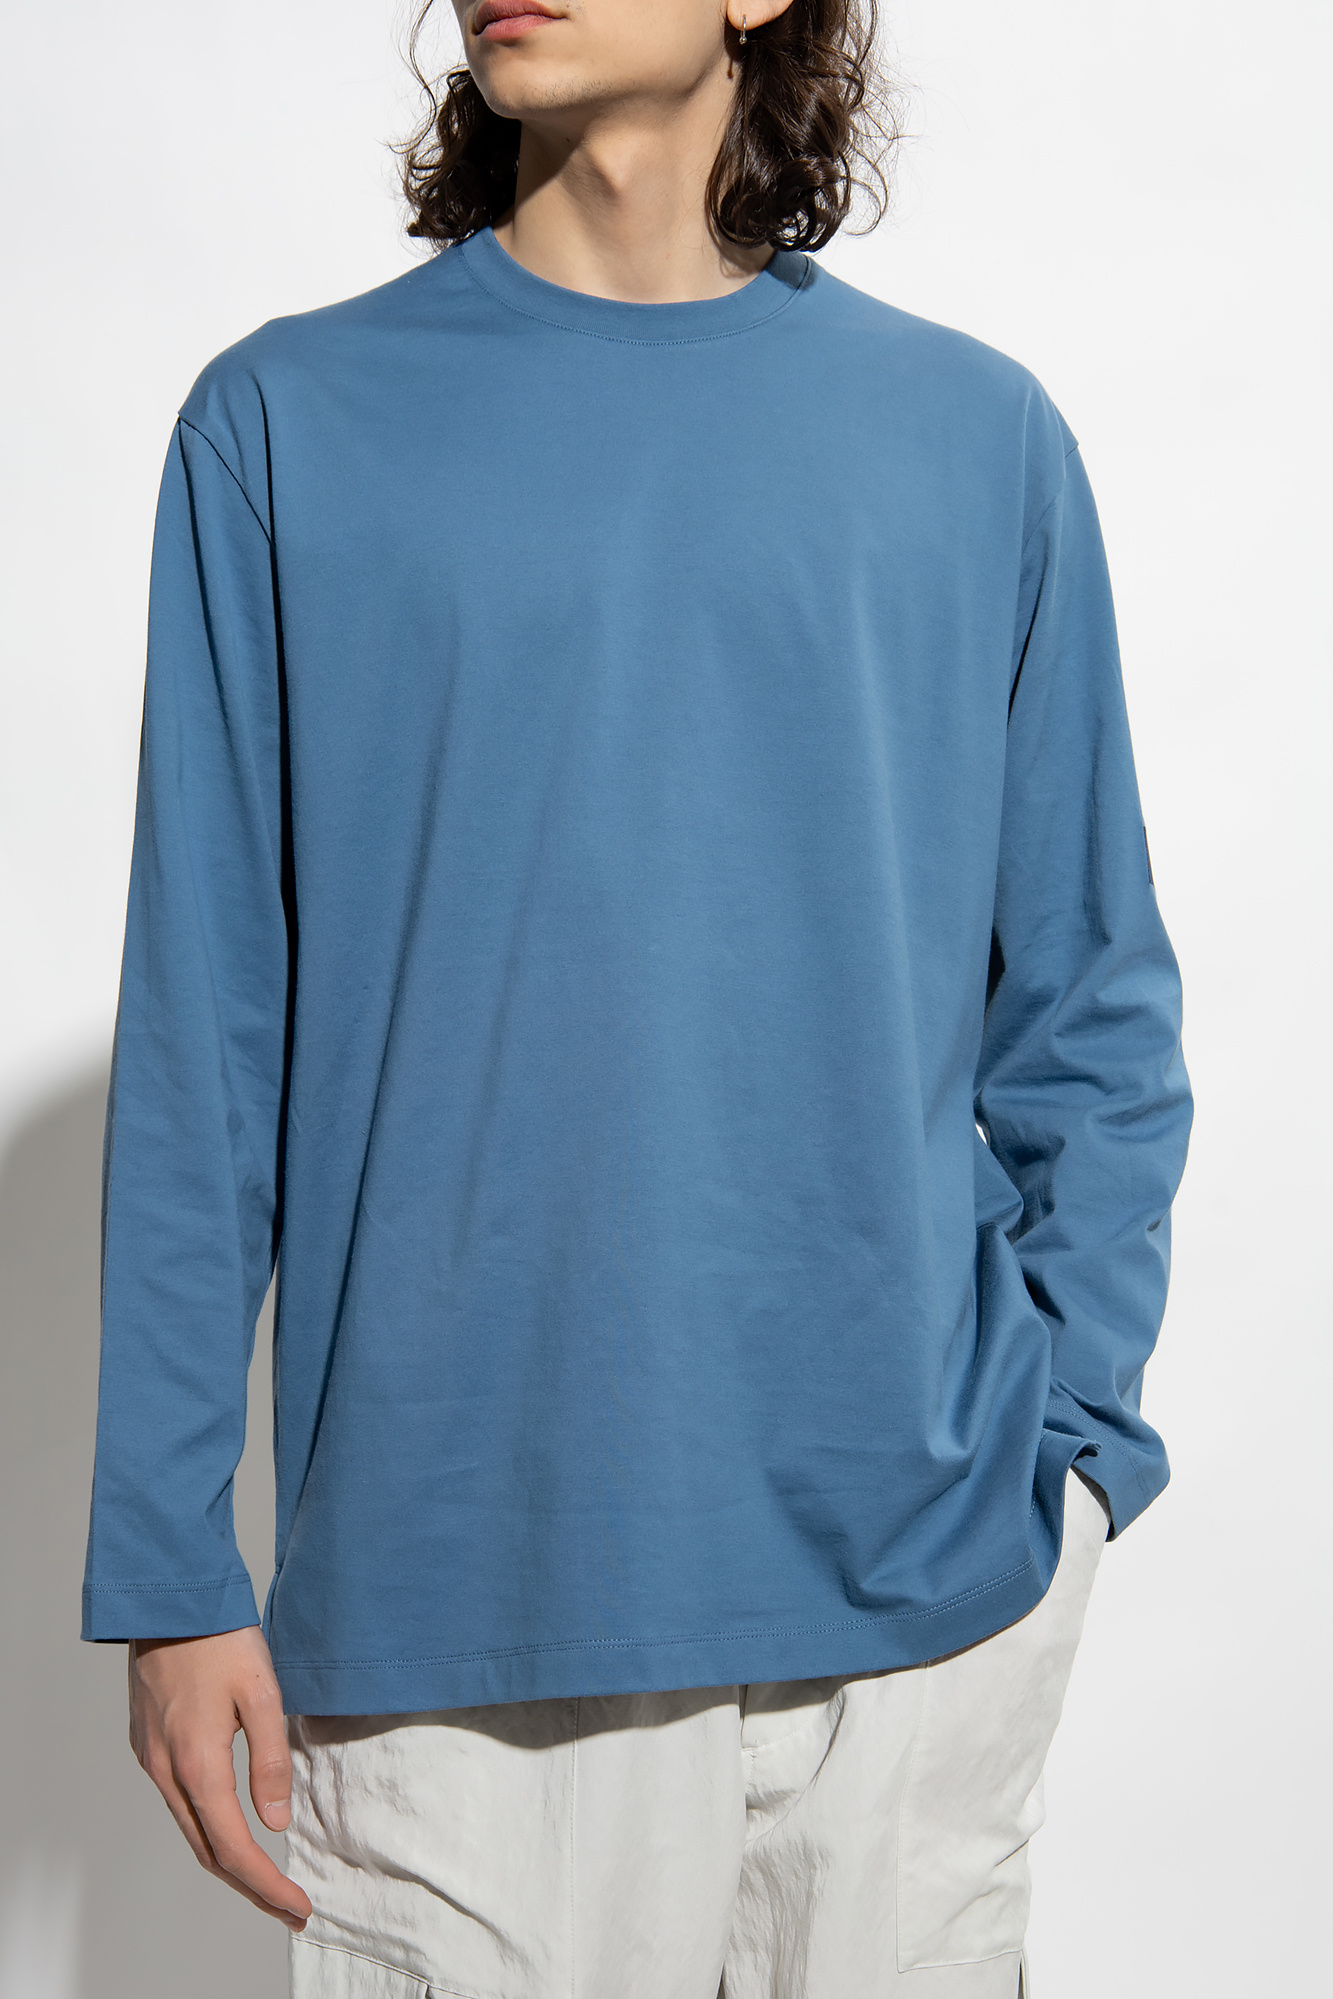 Blue Long-sleeved T-shirt Y-3 Yohji Yamamoto - Vitkac GB